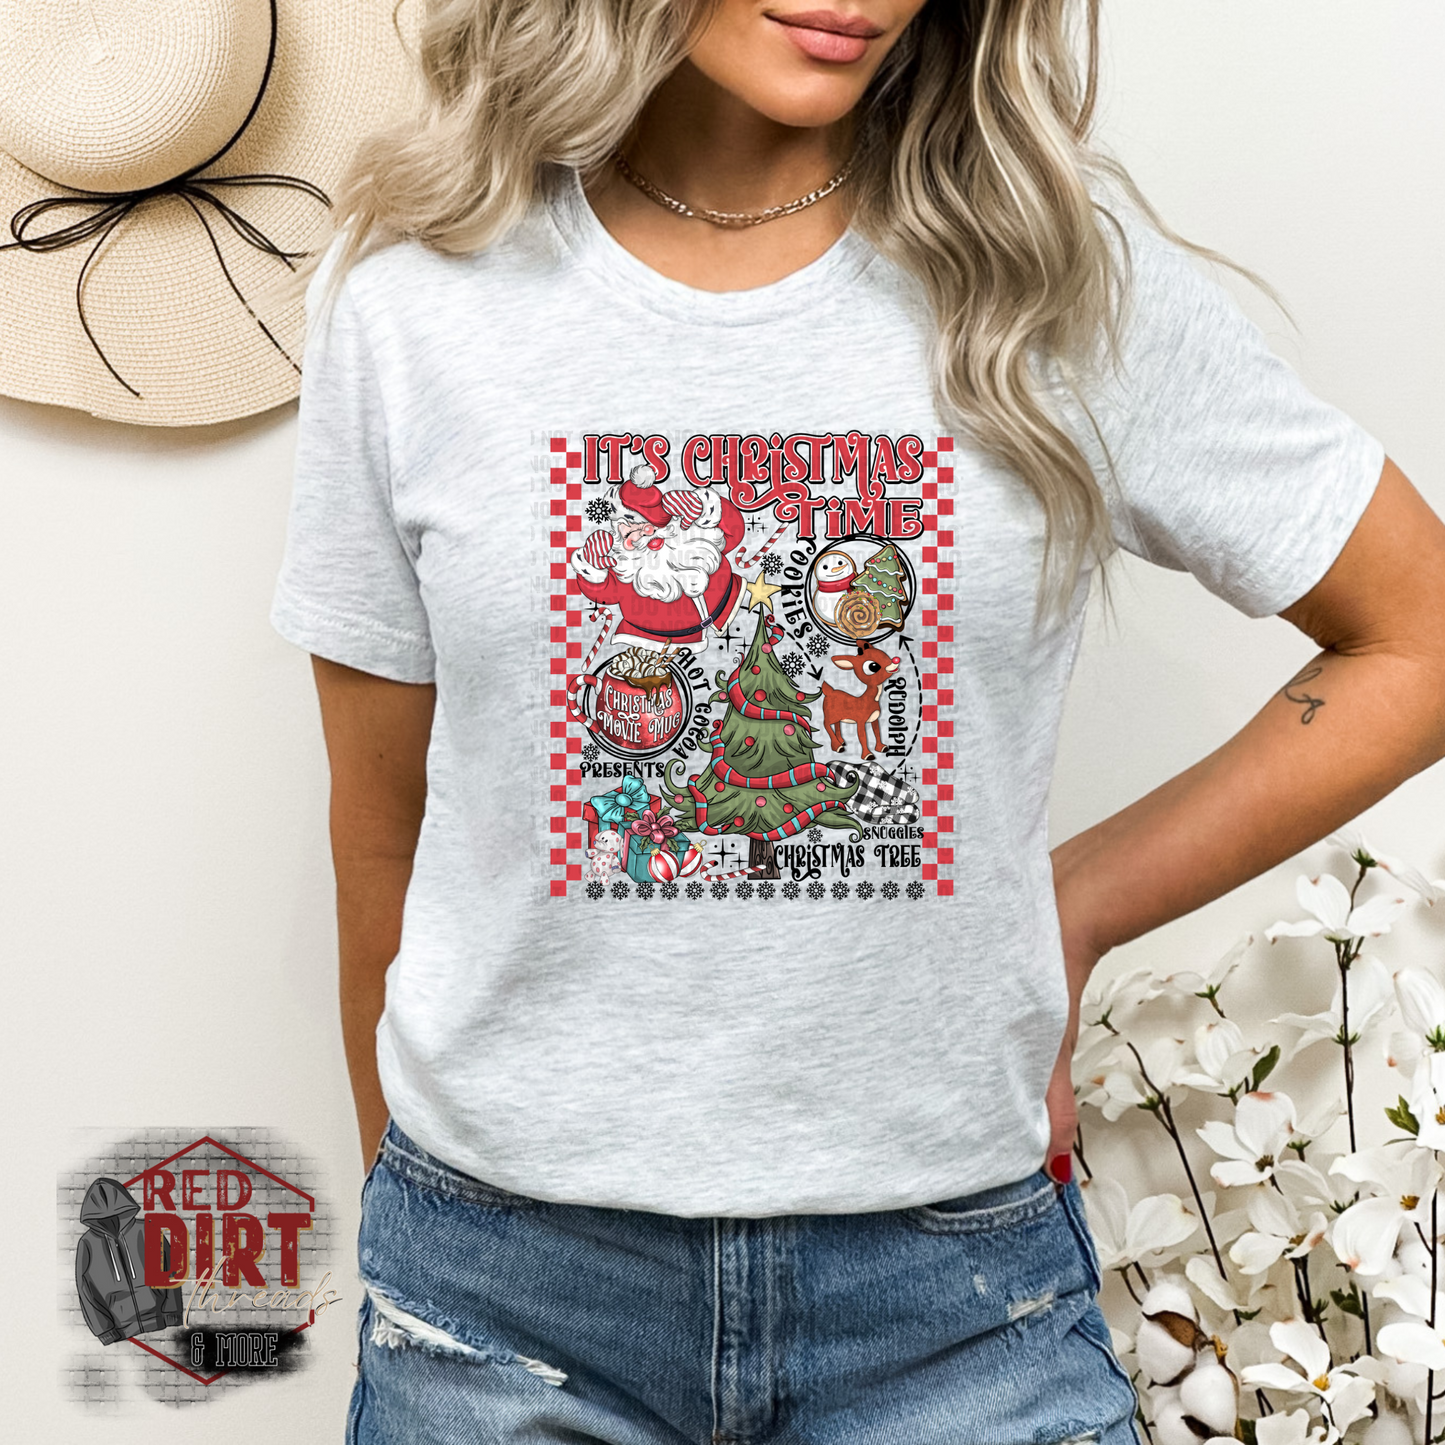 It's Christmas Time T-Shirt | Trendy Christmas Shirt | Fast Shipping | Super Soft Shirts for Women/Kid's